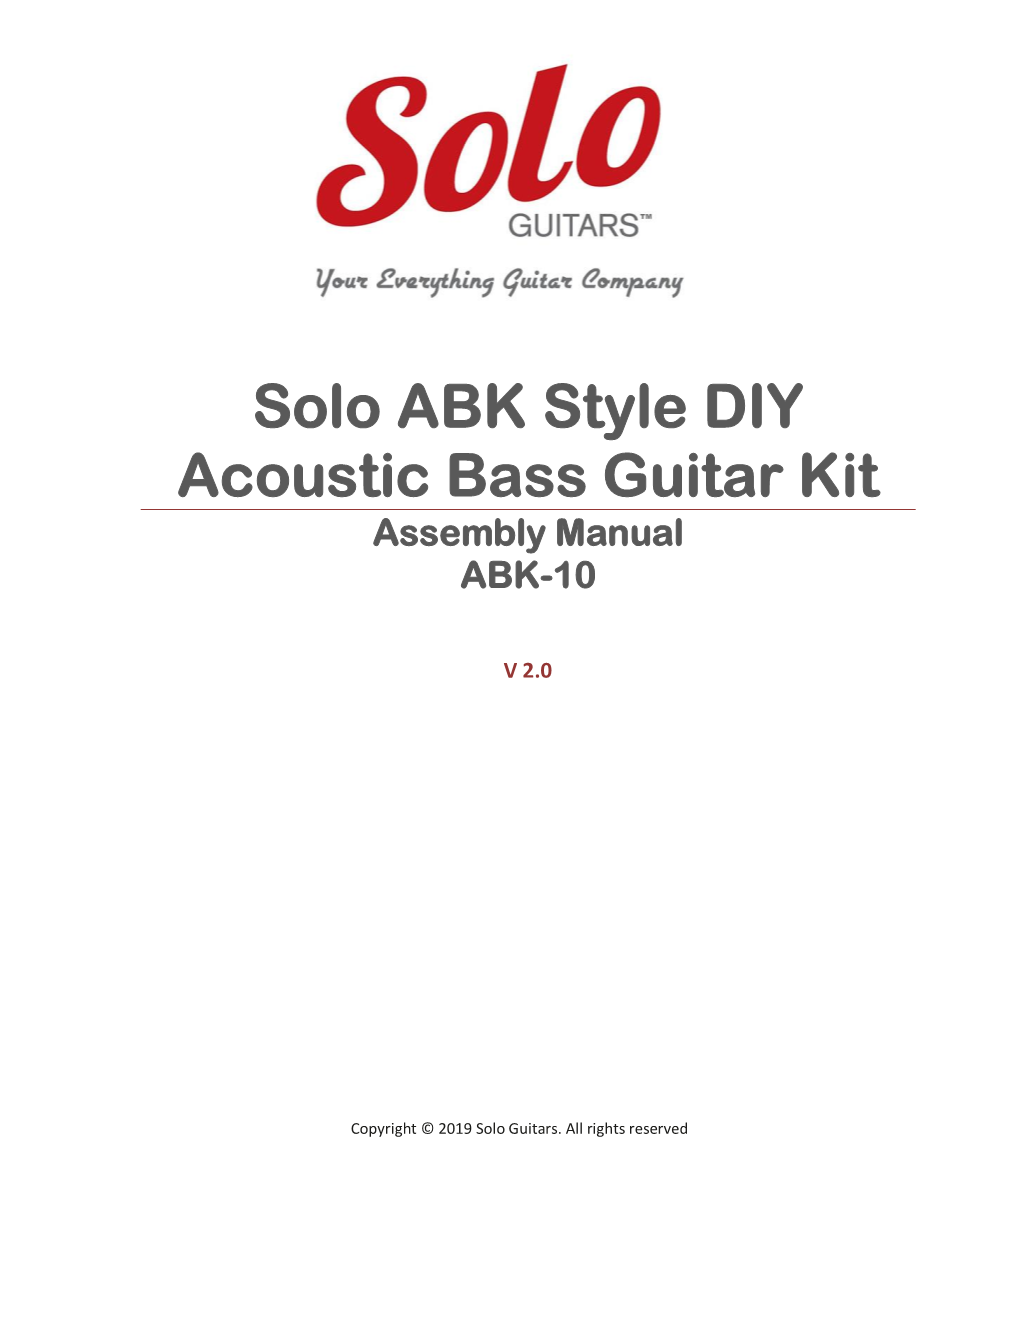 Solo ABK Style DIY Acoustic Bass Guitar Kit